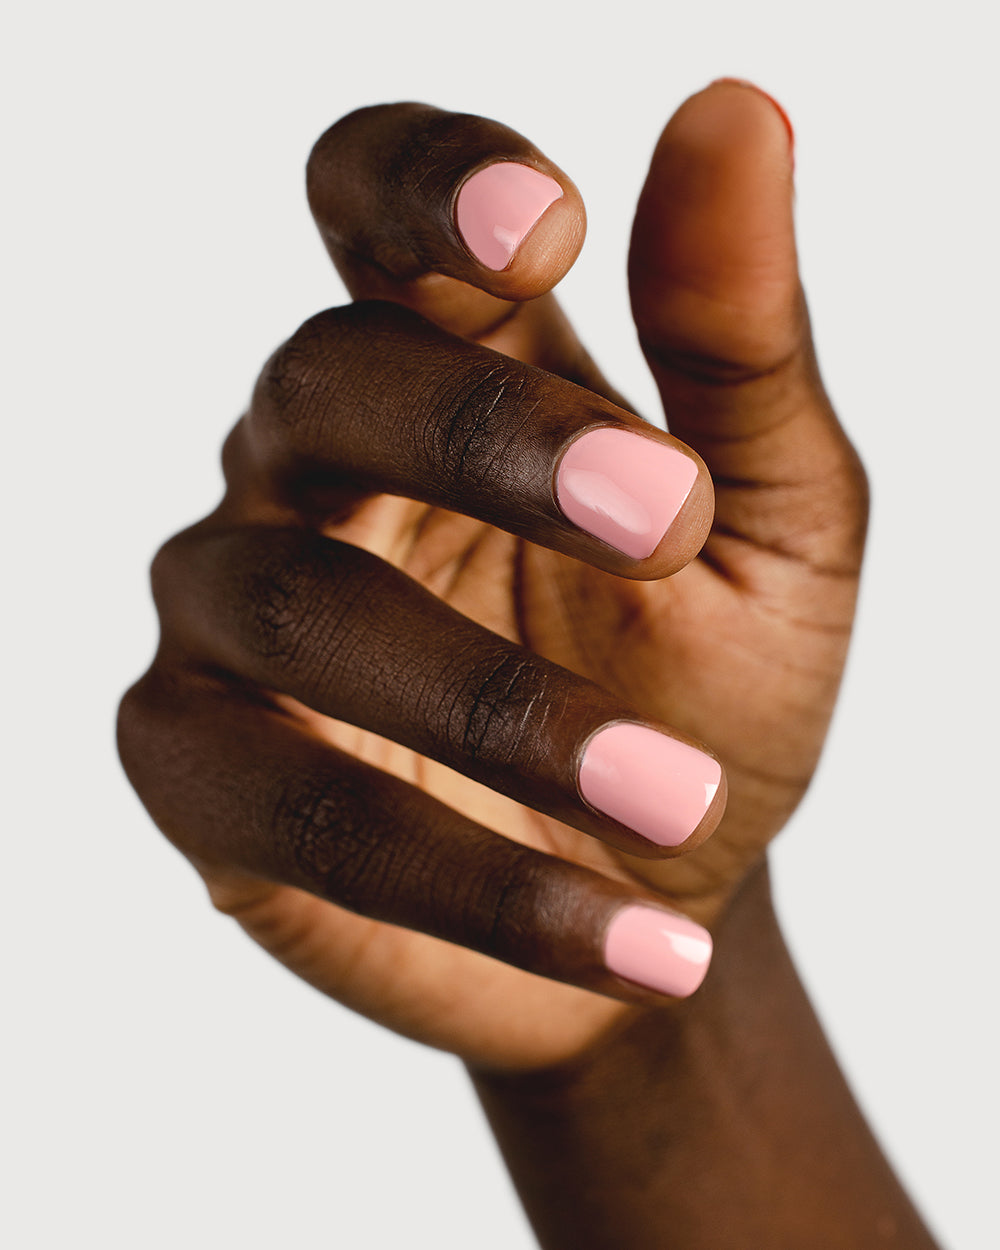 Cherry blossom pink nail polish hand swatch on dark skin tone